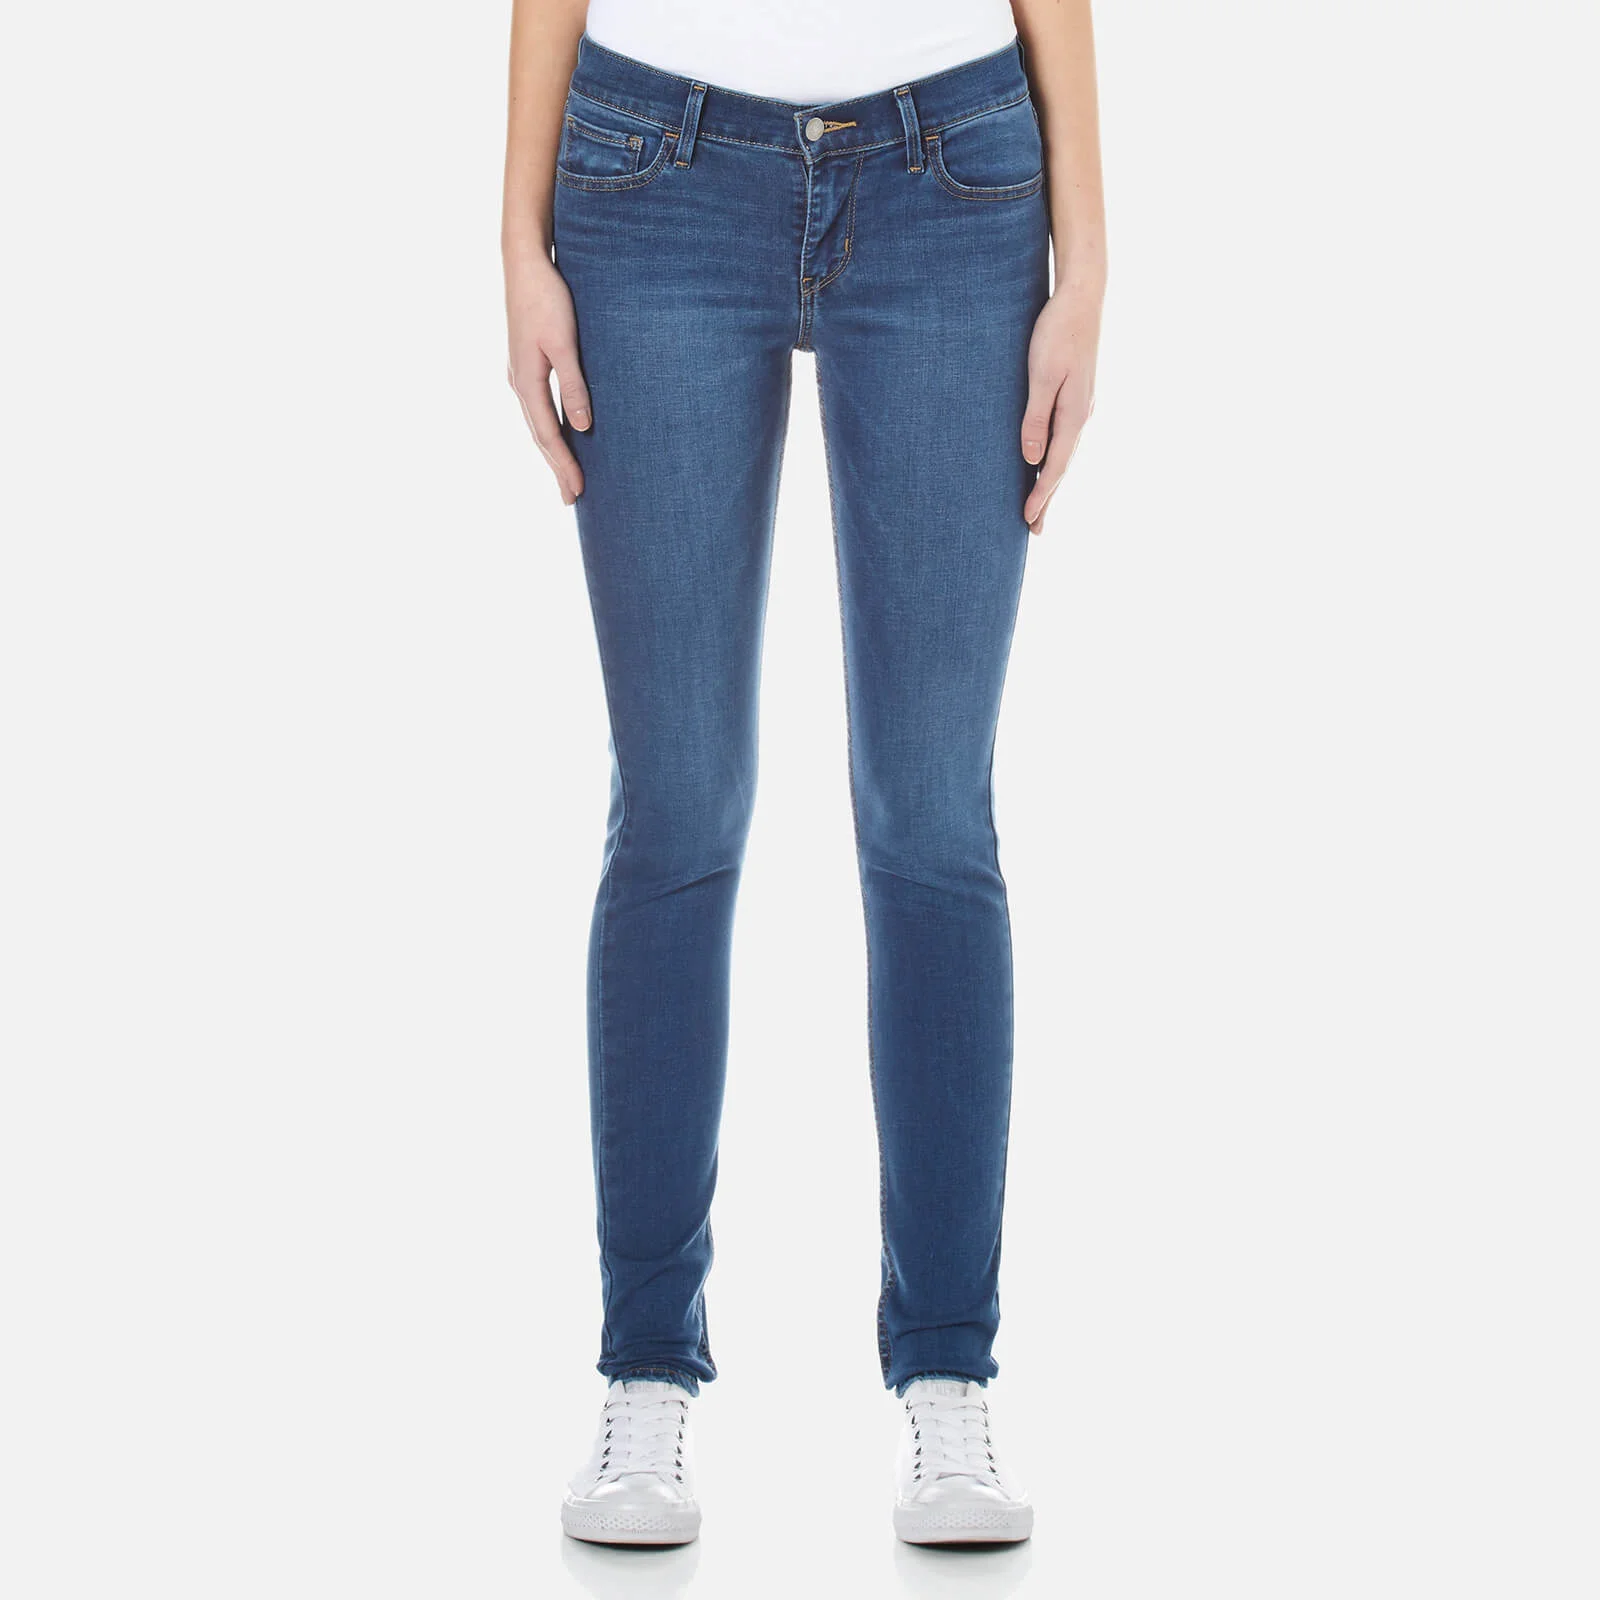 Levi's Women's 710 FlawlessFX Super Skinny Jeans - Darling Blue Image 1